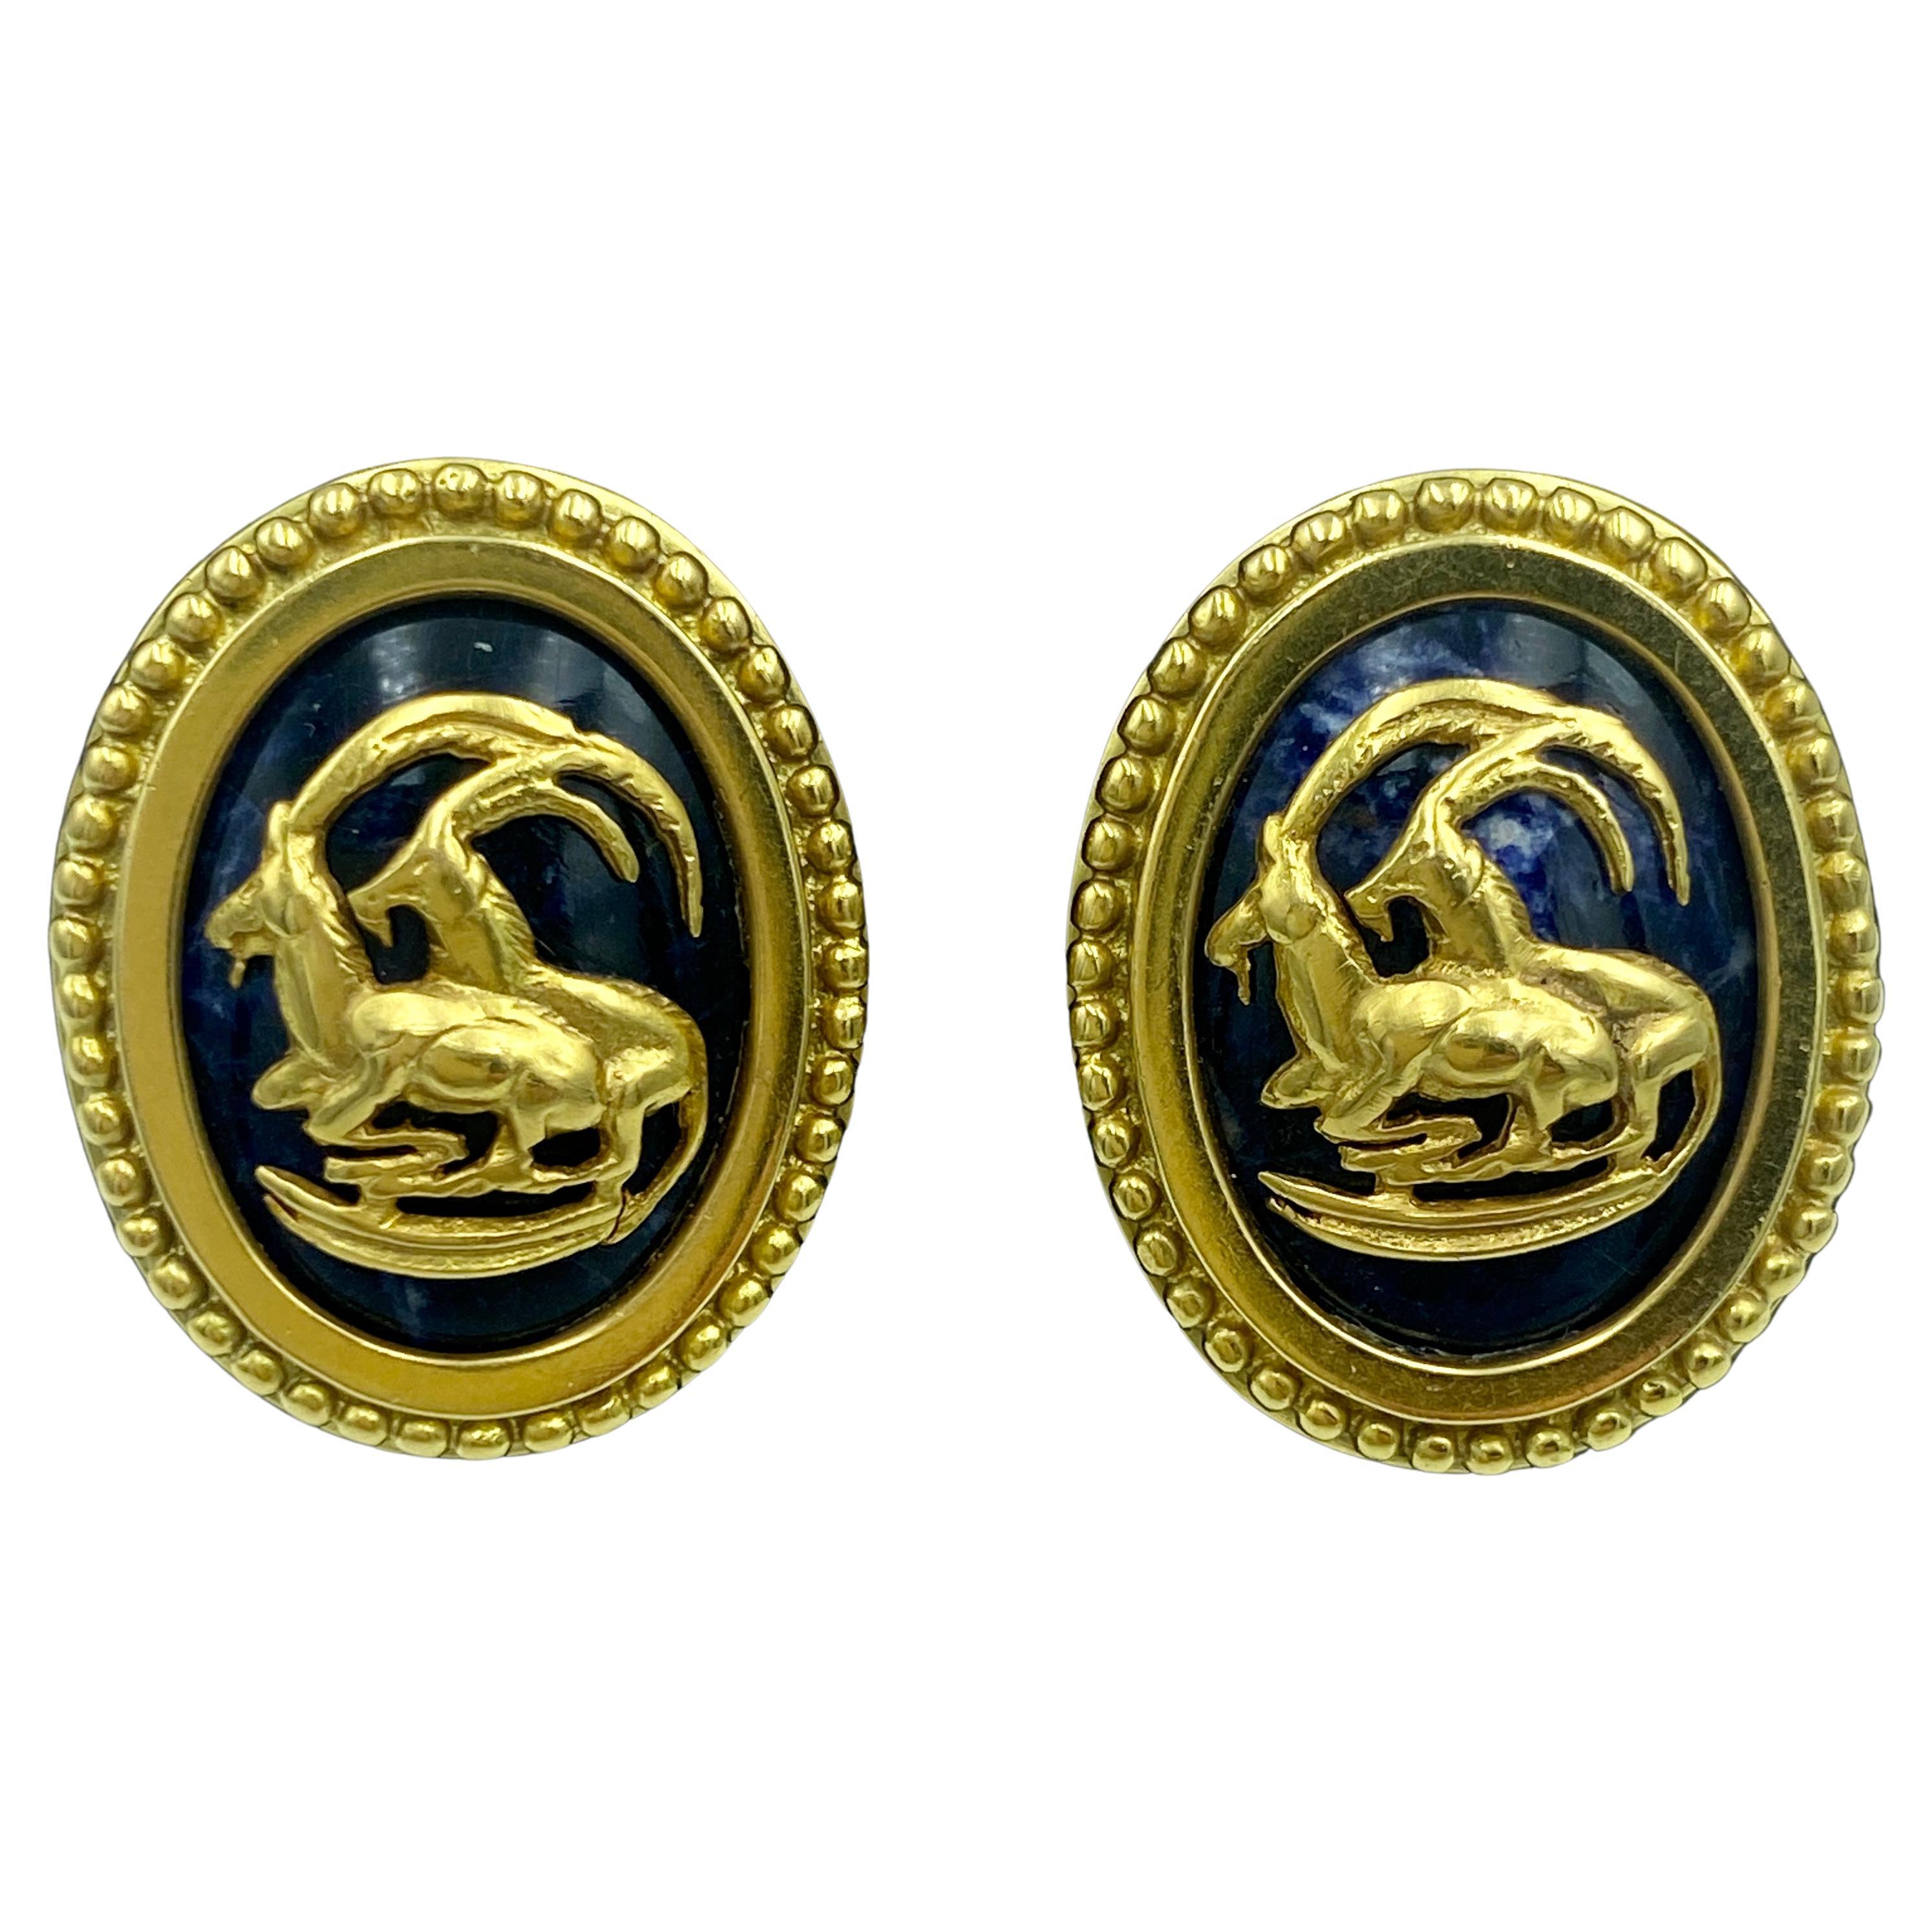 Ilias Lalaounis 18k gold and lapis lazuli earrings with mountain goat design